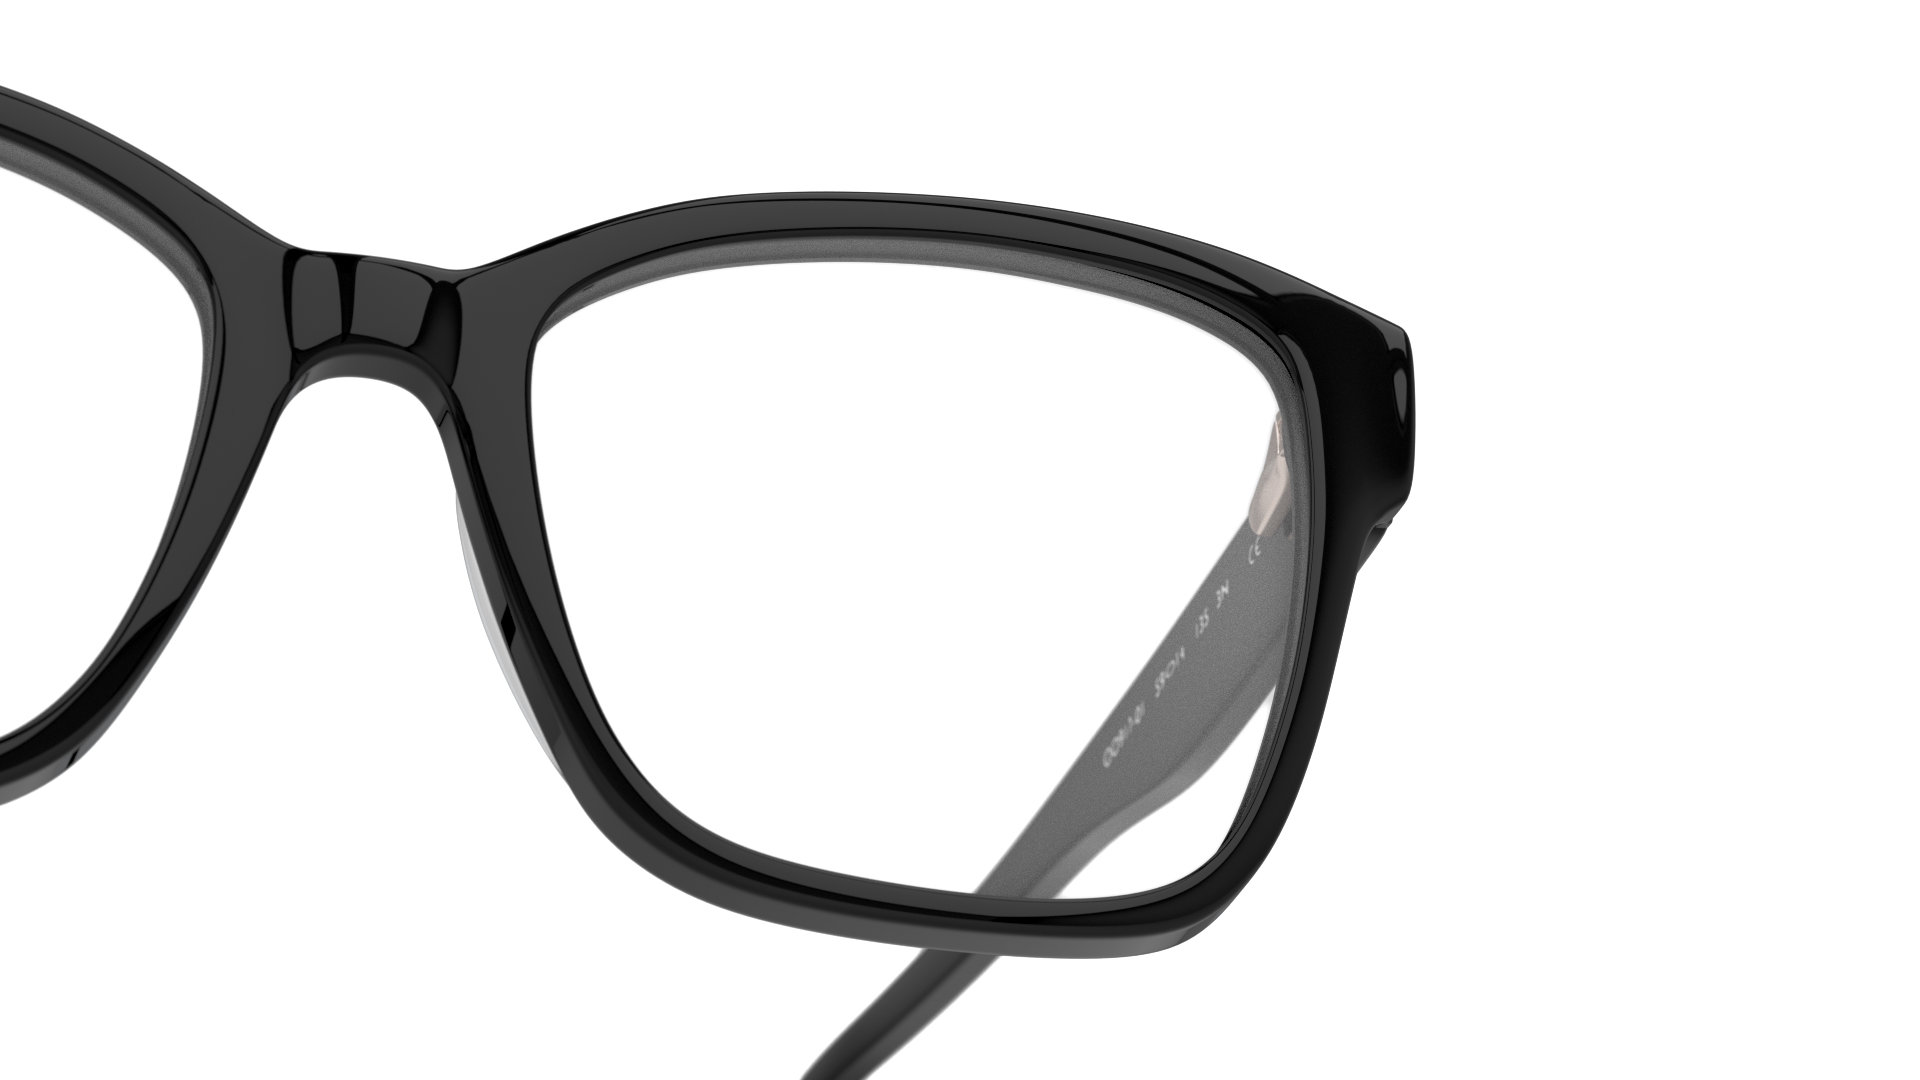 Detail01 Unofficial UNOF0361 Glasses Transparent / Black